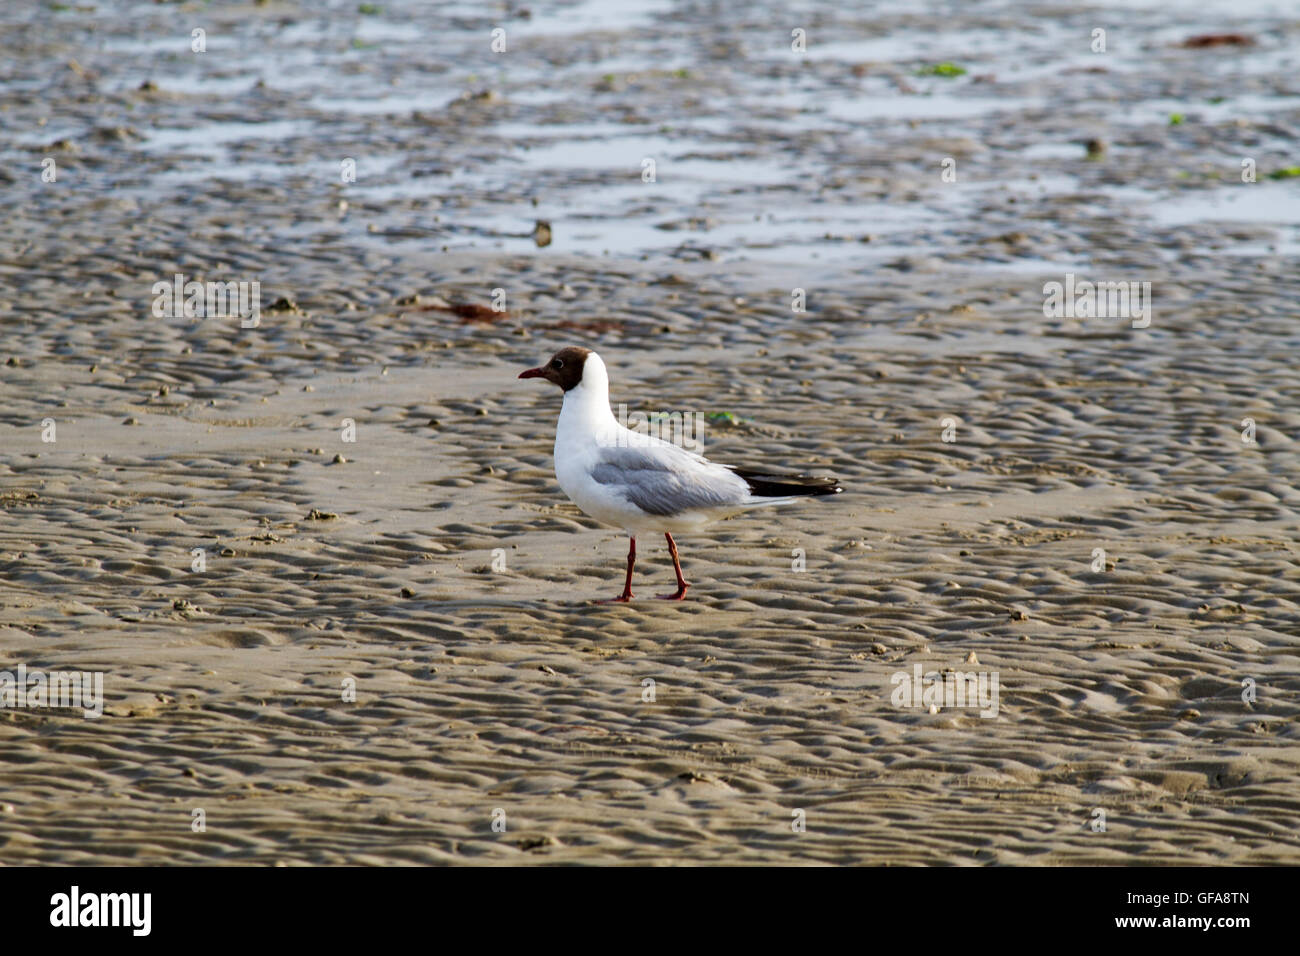 Seagull standing on sandy beach Stock Photo